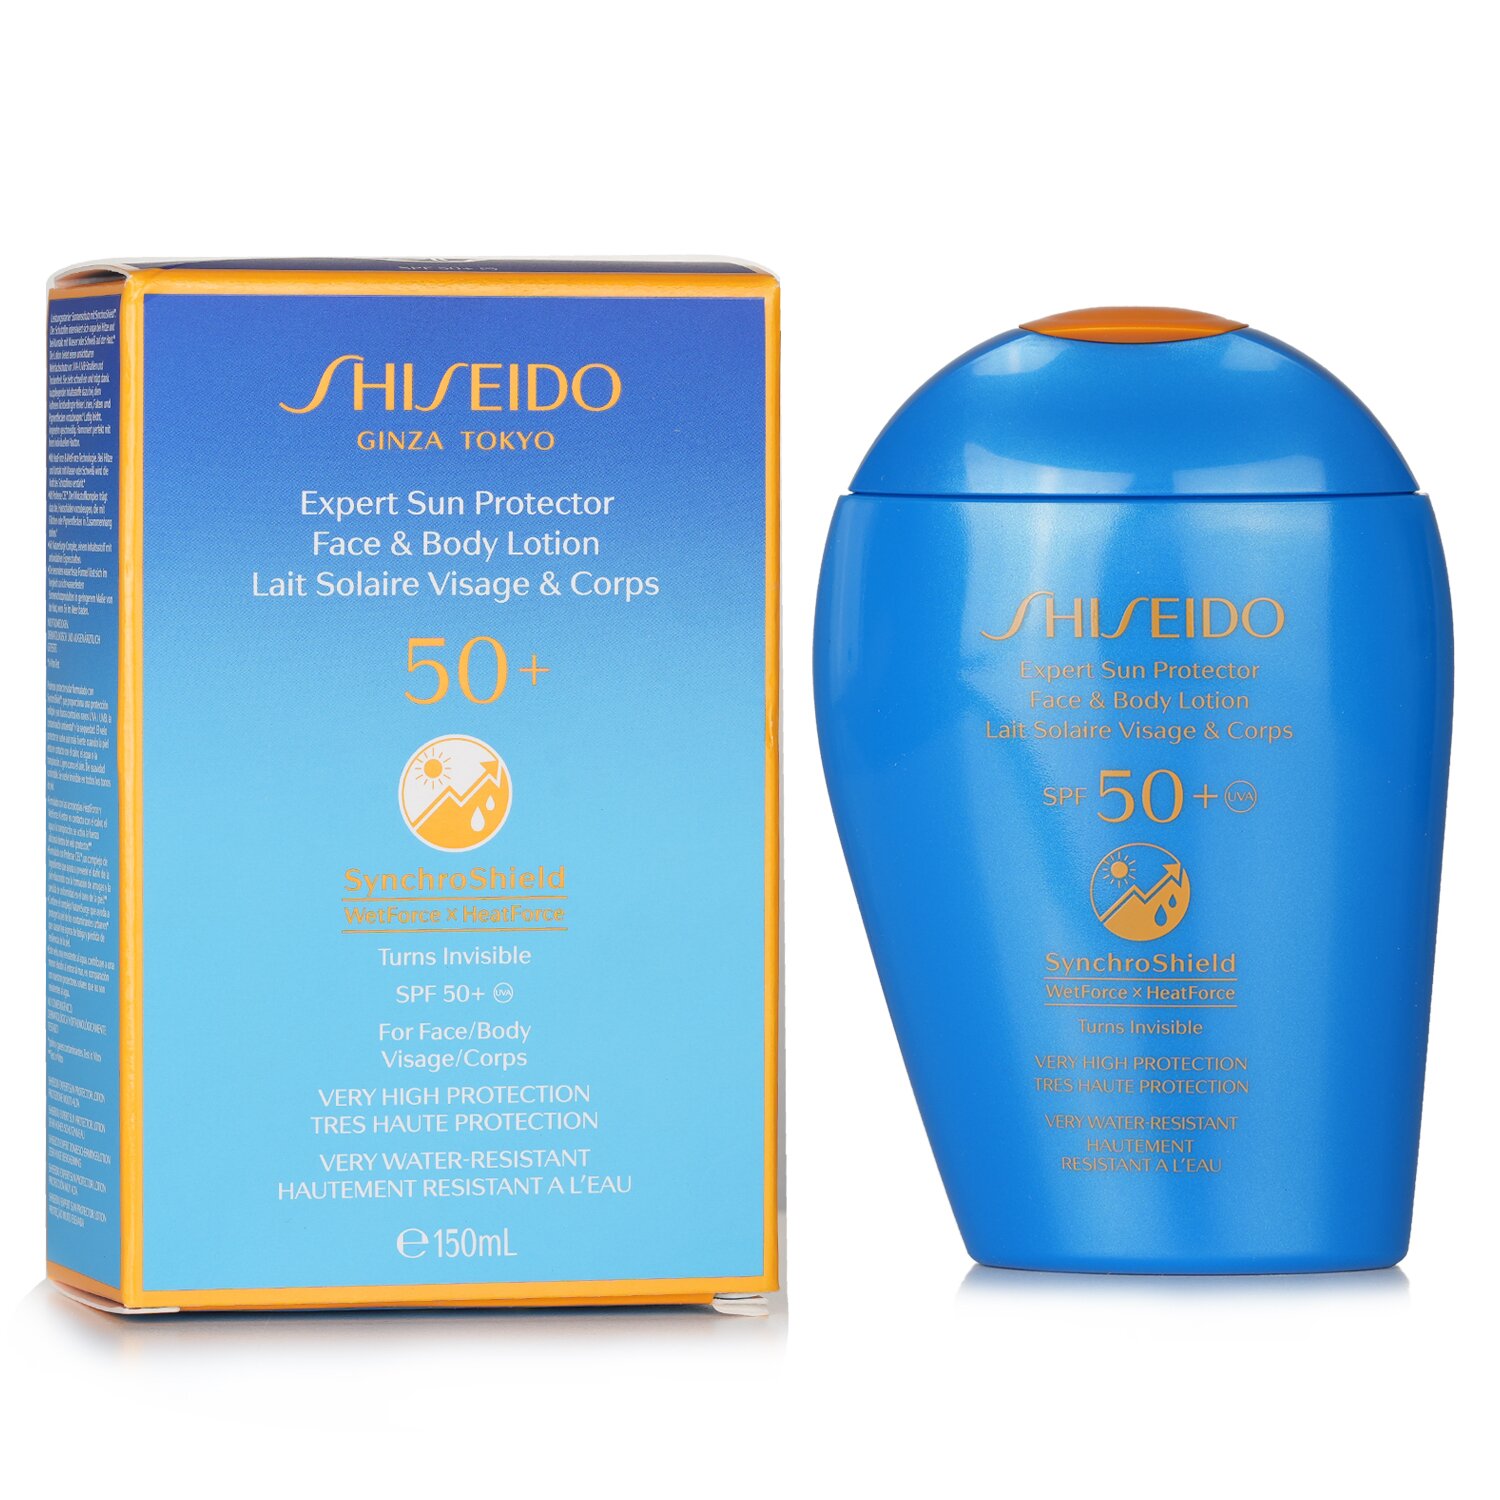 Shiseido Expert Sun Protector SPF 50+UVA Face & Body Lotion (Turns Invisible, Very High Protection, Very Water-Resistant) קרם פנים וגוף עם הגנה גבוהה נגד שהשמש, עמיד במים 150ml/5.07oz